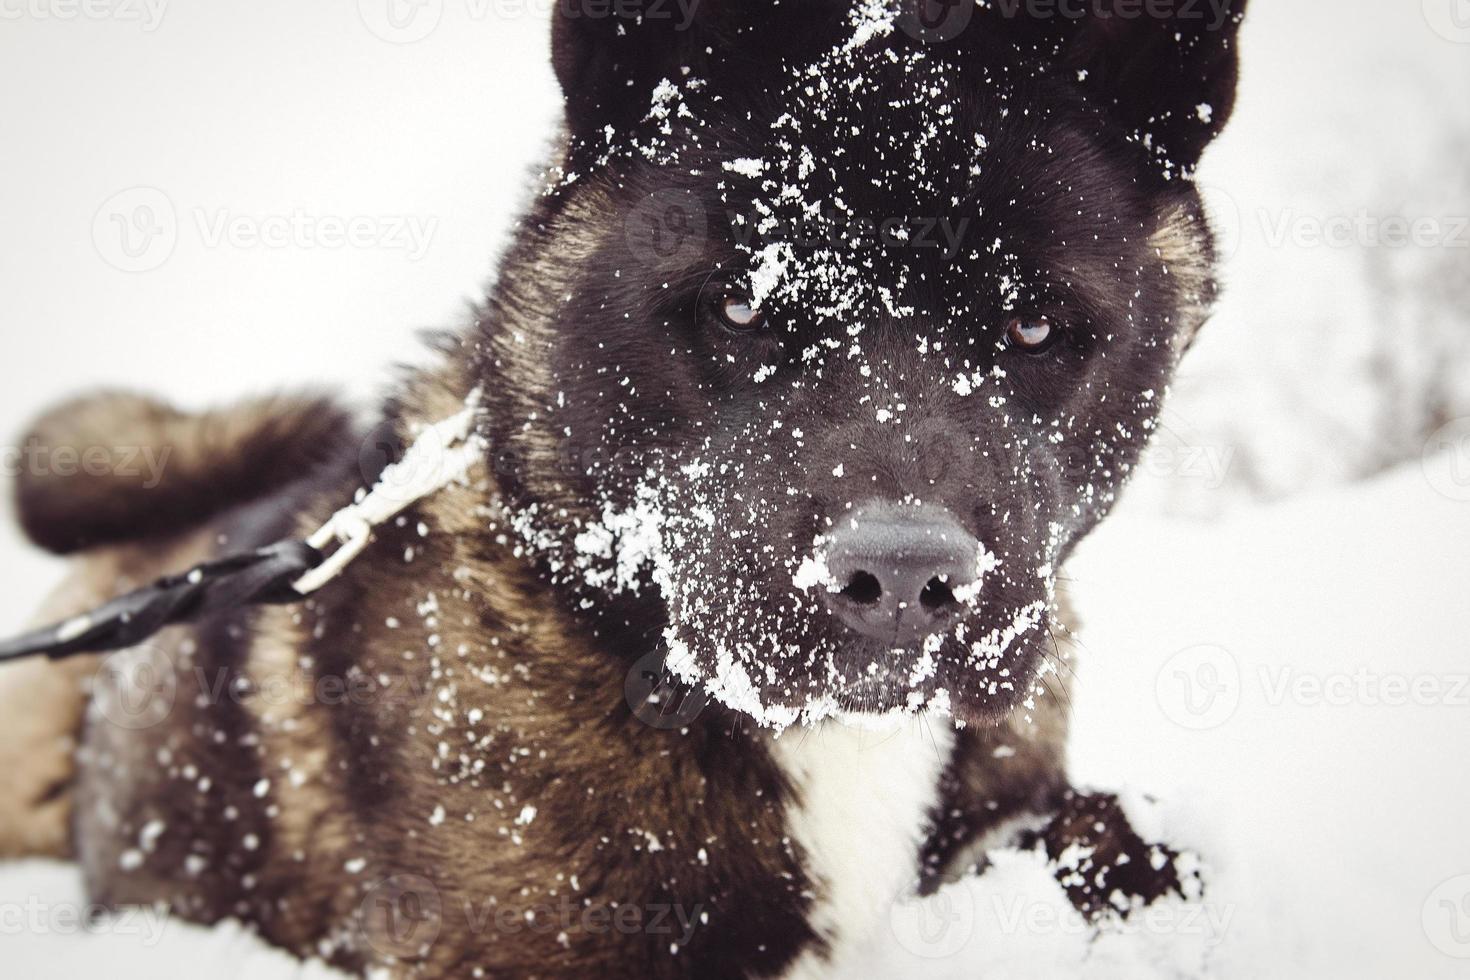 malamute de alaska color oscuro en el entorno natural foto